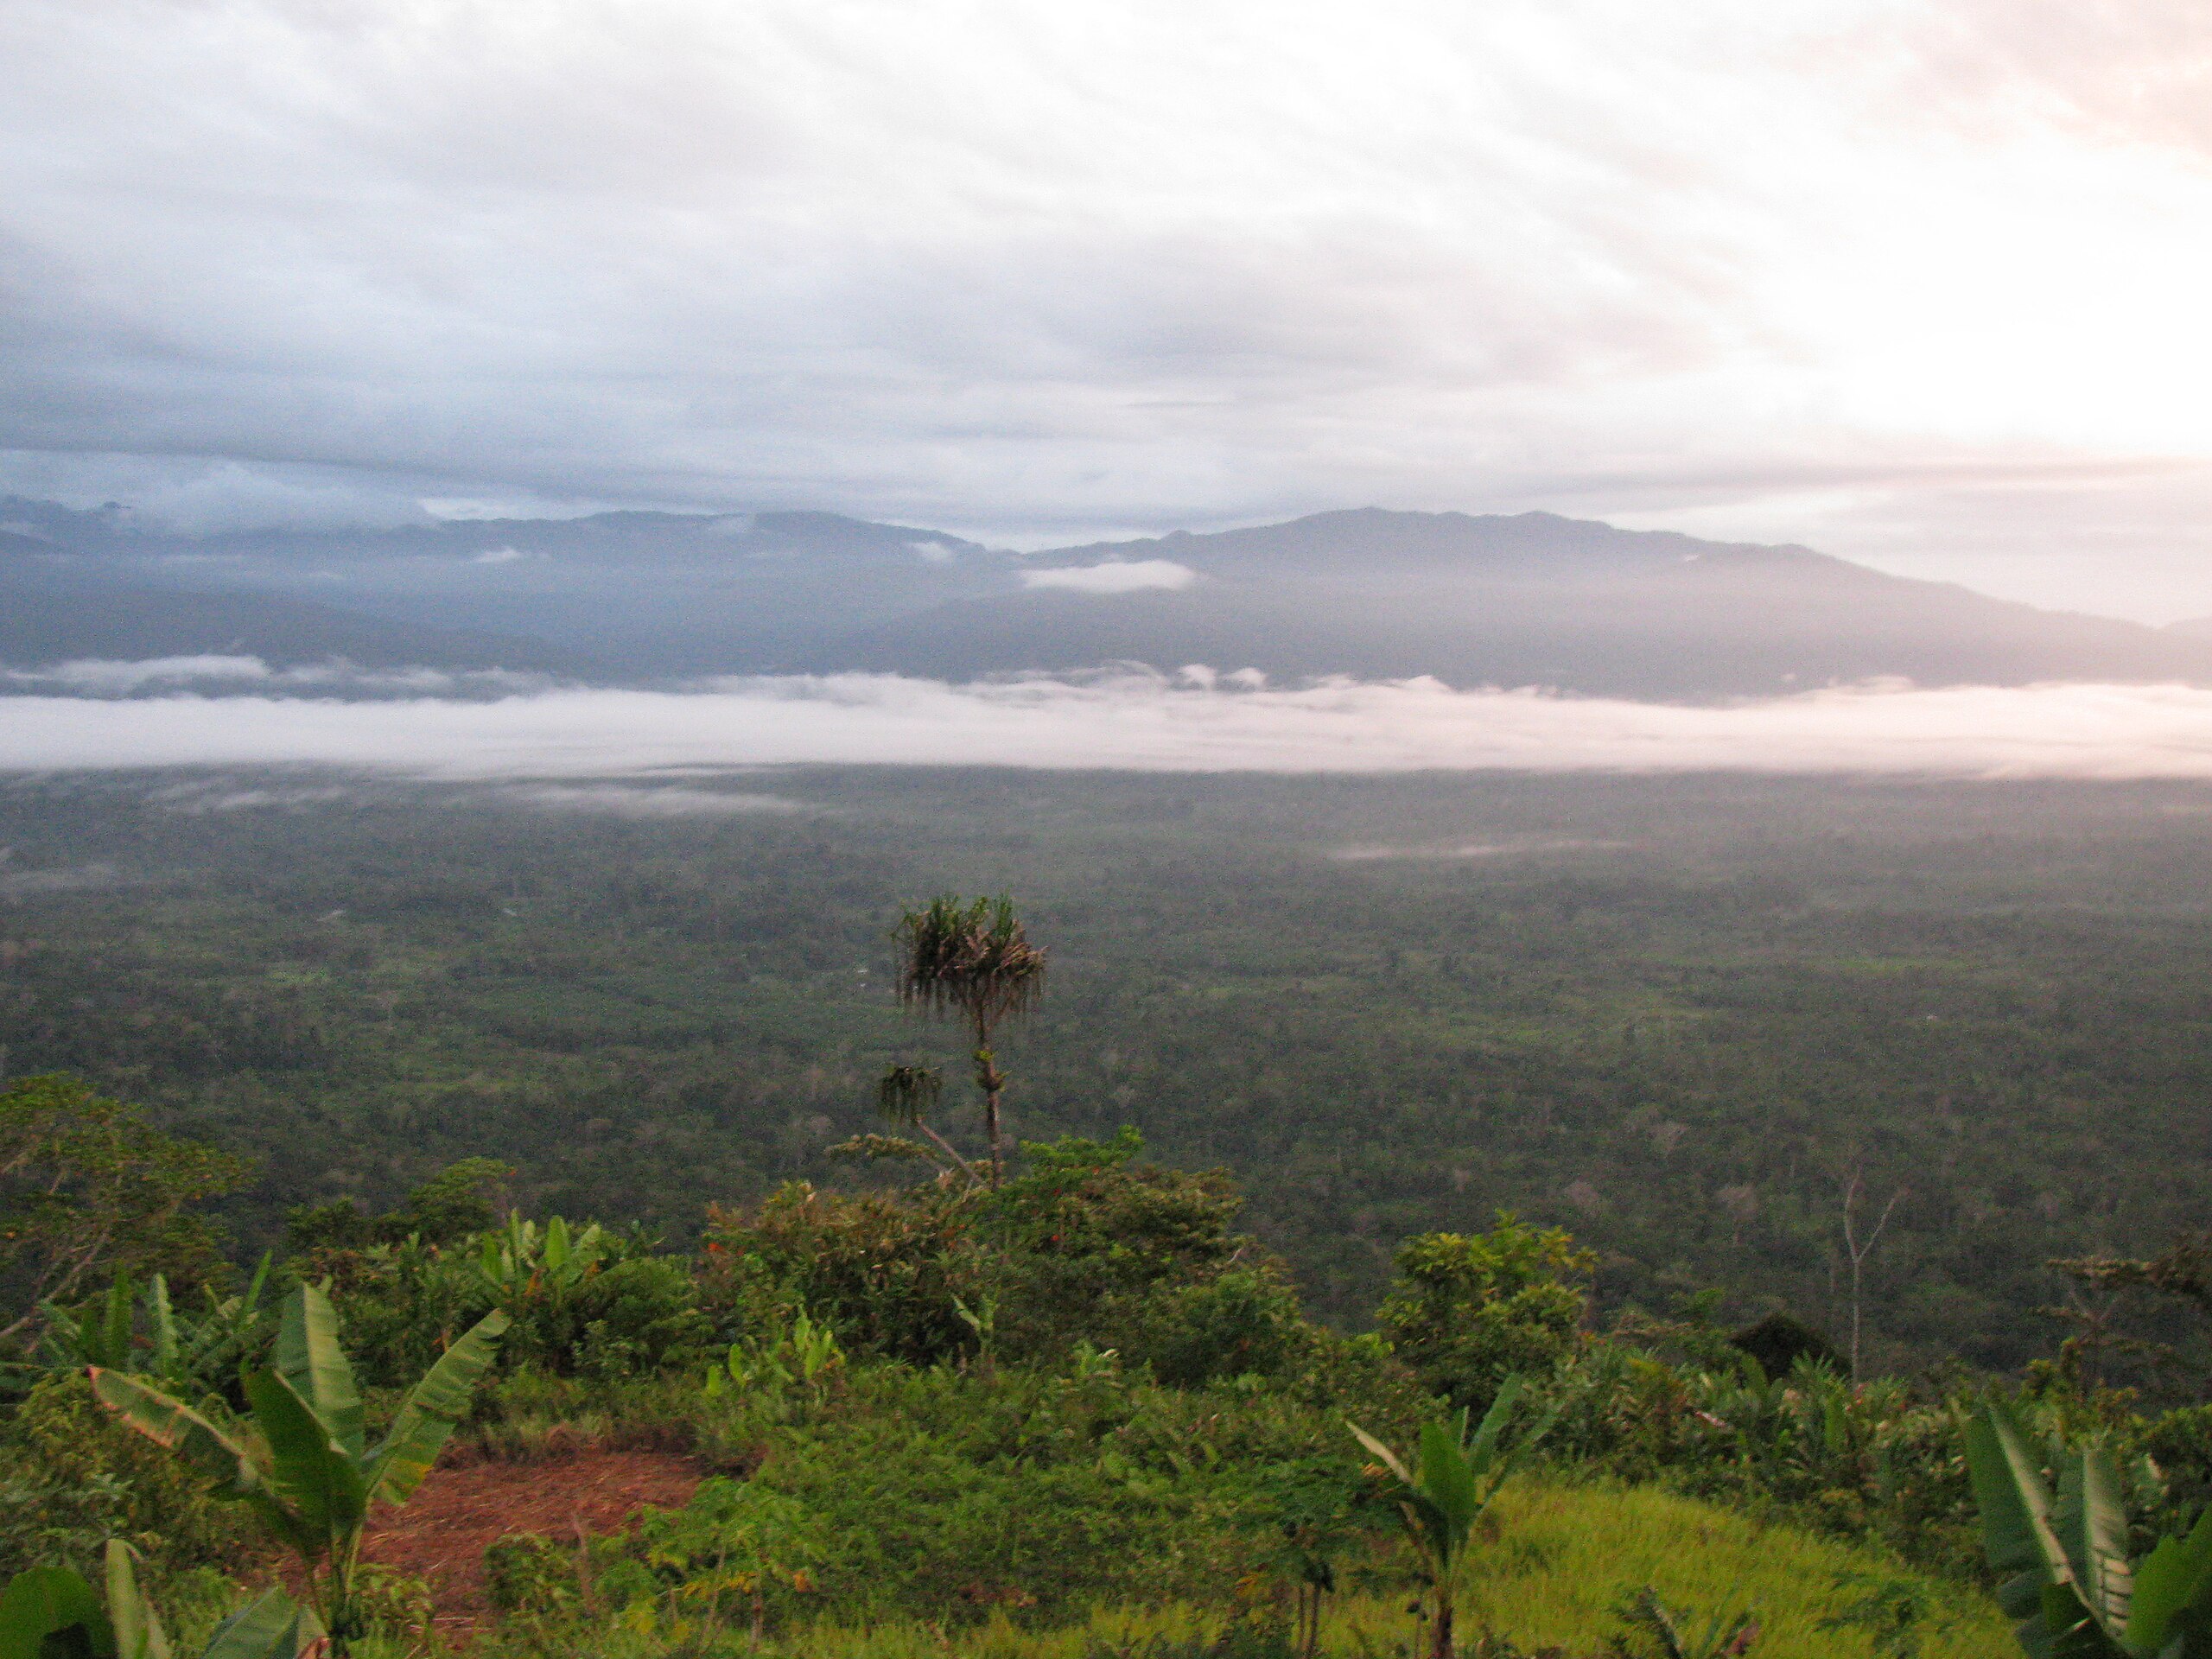 A cloudy sky over Papua New Guinea's lush green jungle.